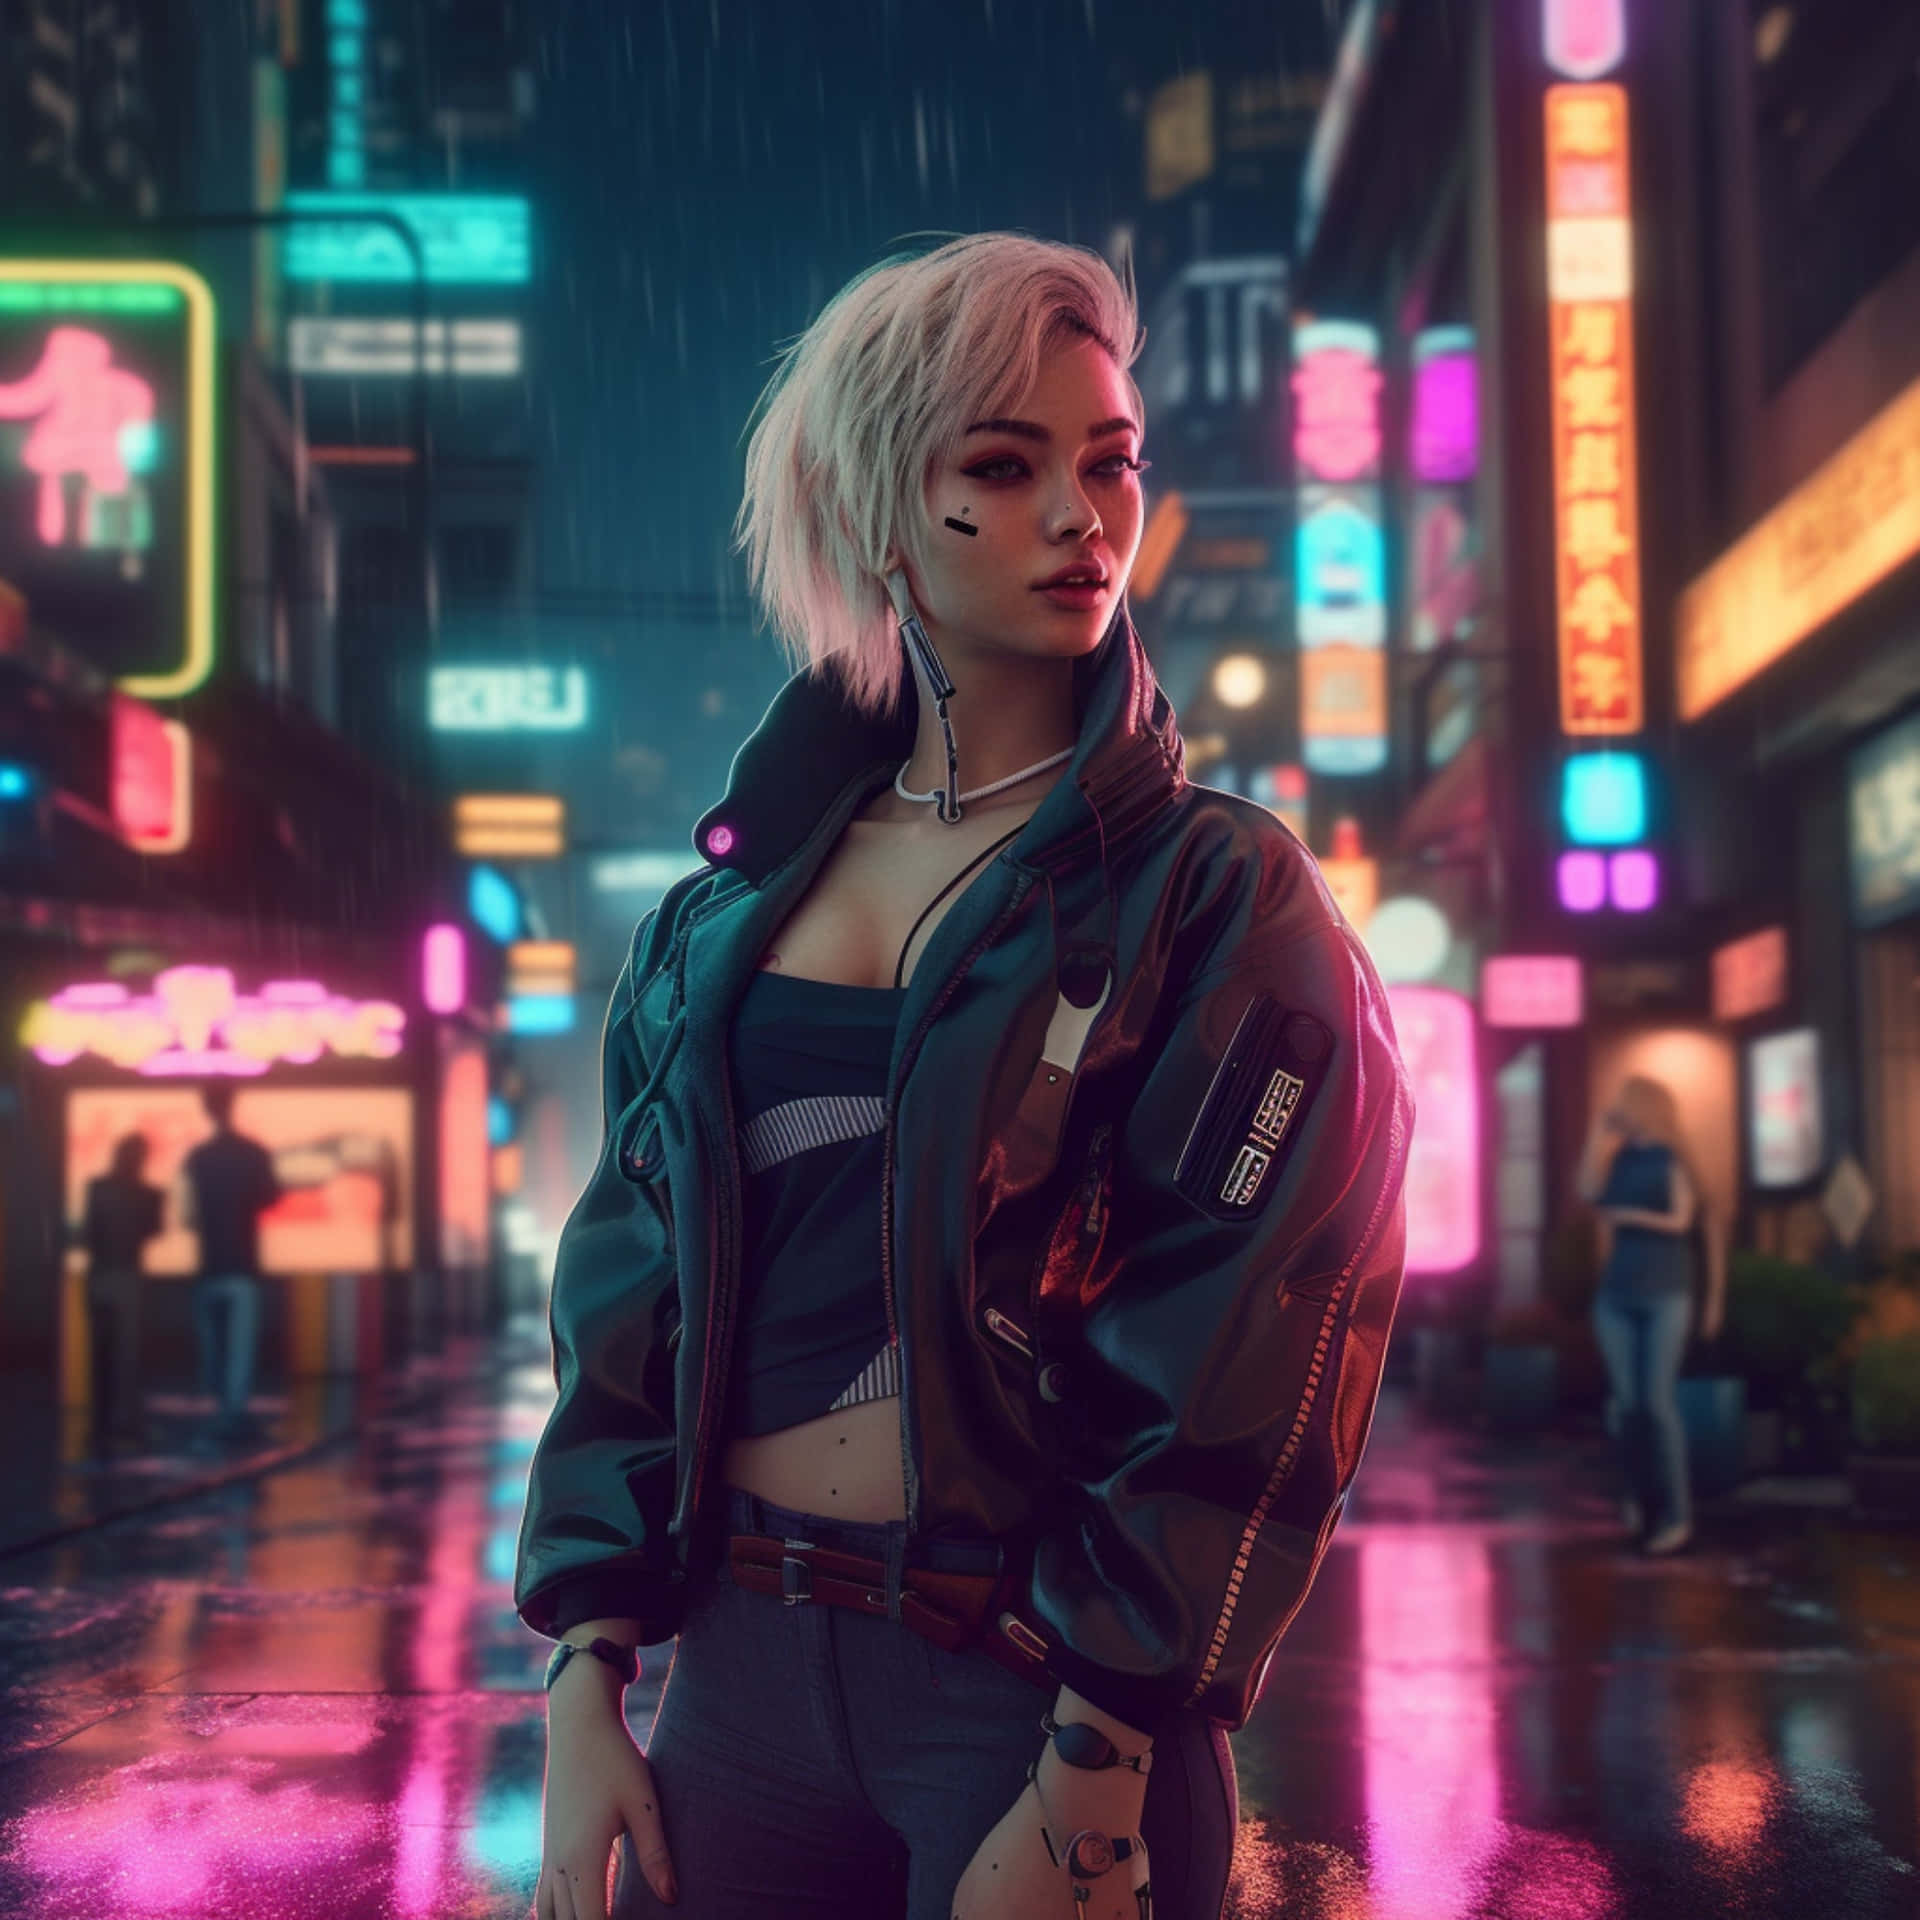 Cyberpunk Rainy Night Portrait Wallpaper